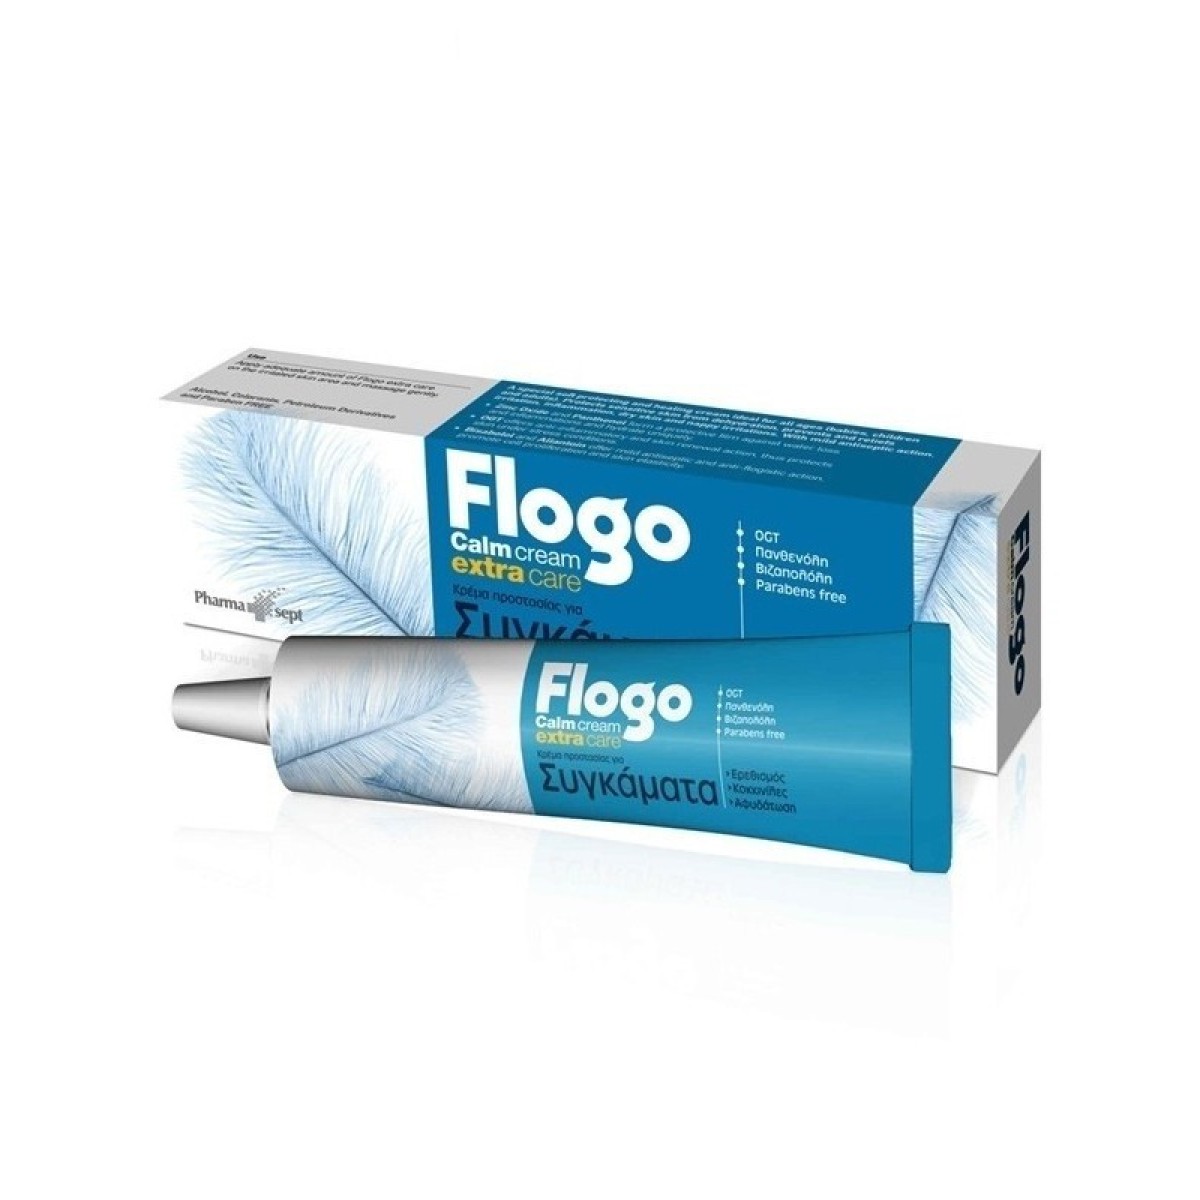 Pharmasept |  Flogo Calm Extra Care | Κρέμα  για Συγκάματα  | 50ml